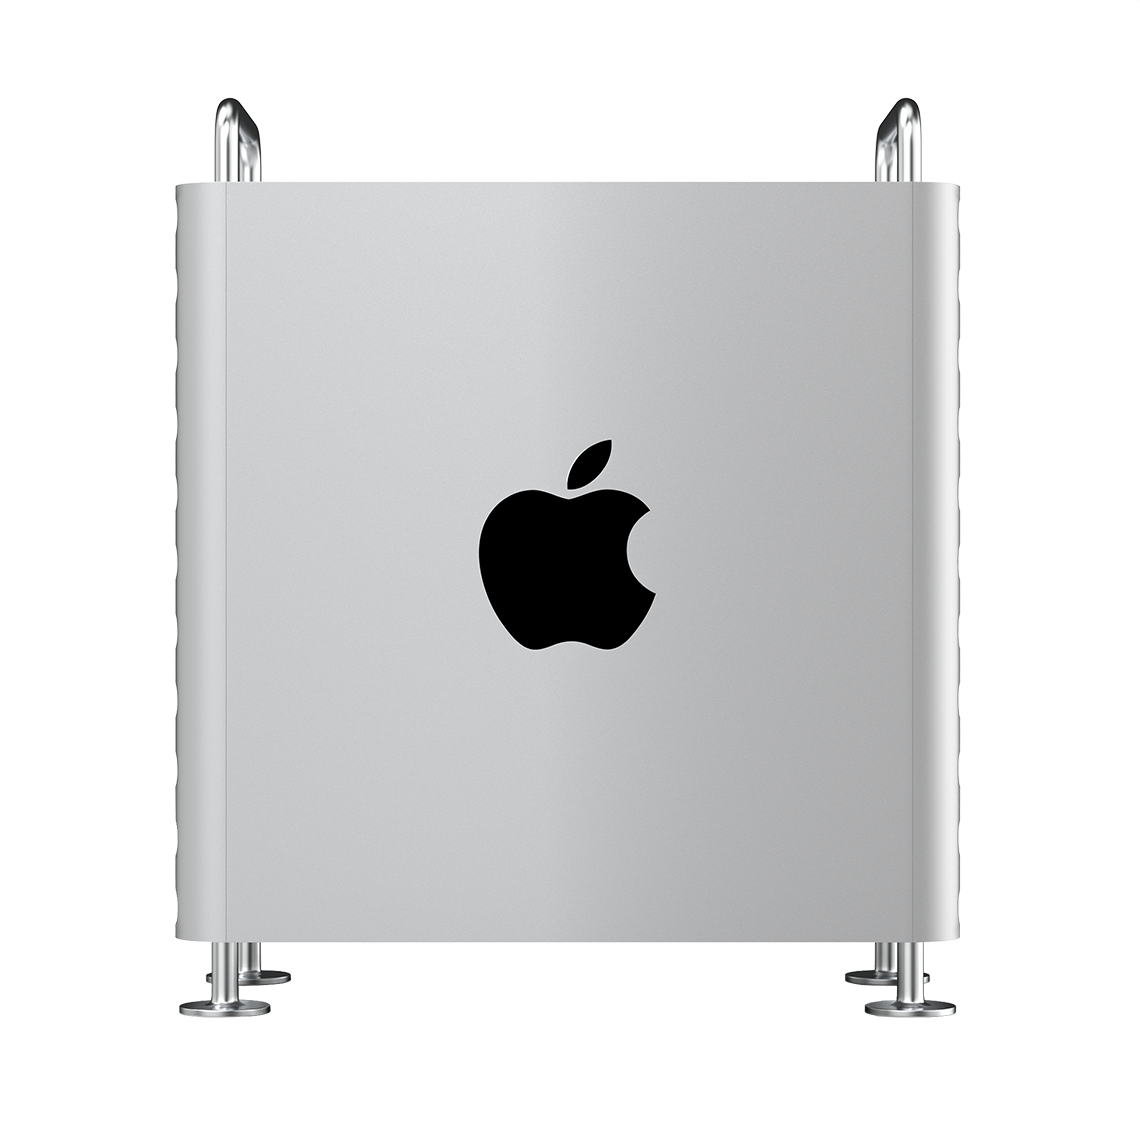 Apple 2019 Mac Pro - Intel Xeon 16-Core, 96GB RAM, 2TB Flash, AMD Radeon Pro 580X 8GB, Tower, Grade A